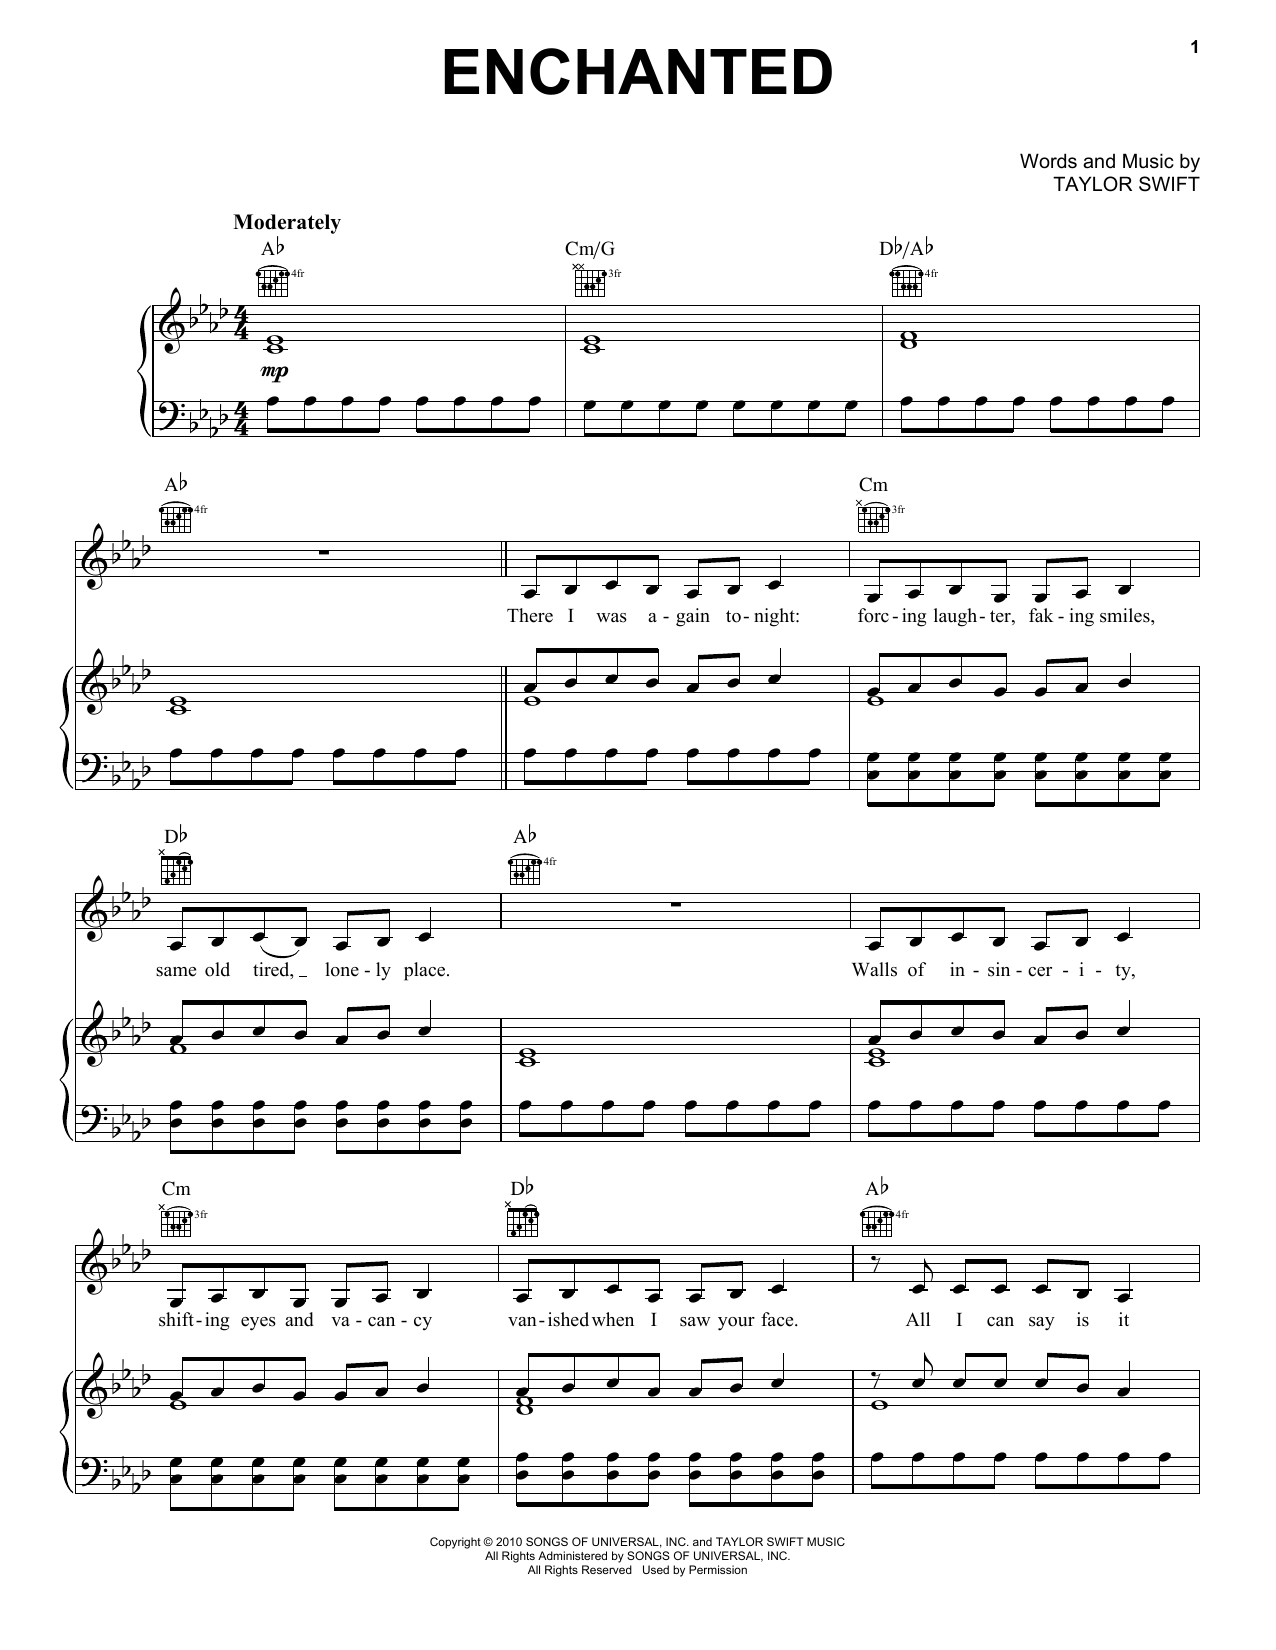 Taylor Swift Enchanted Sheet Music Notes & Chords for Piano (Big Notes) - Download or Print PDF